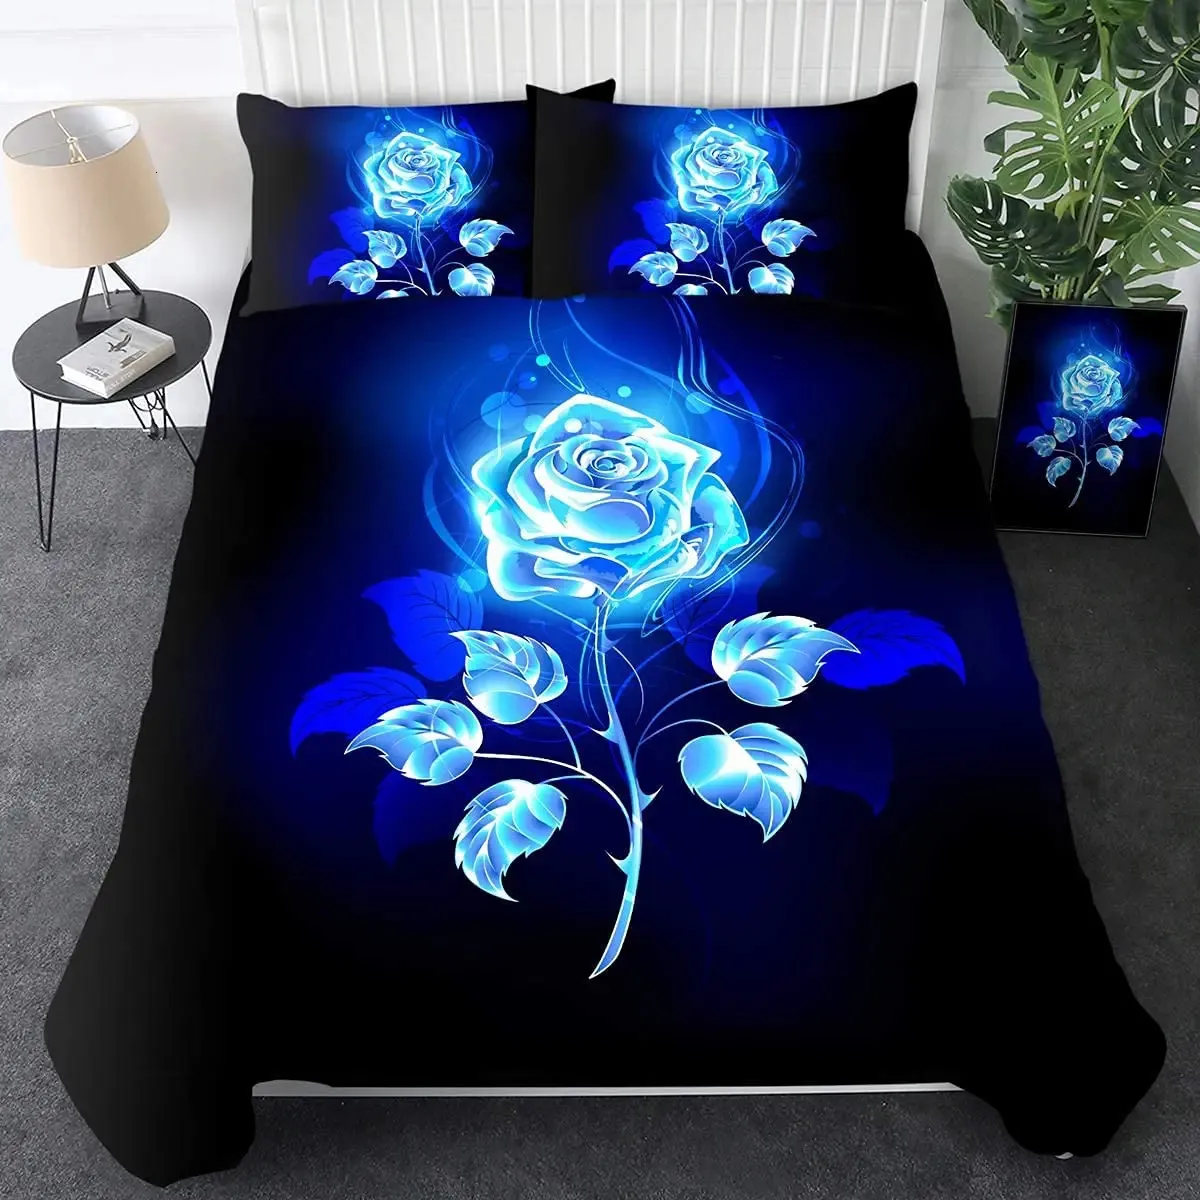 Rose Duvet Cover Set From Blue Flame PrintValentines Day Comforter Floral Bedding SetPillowcase 240131